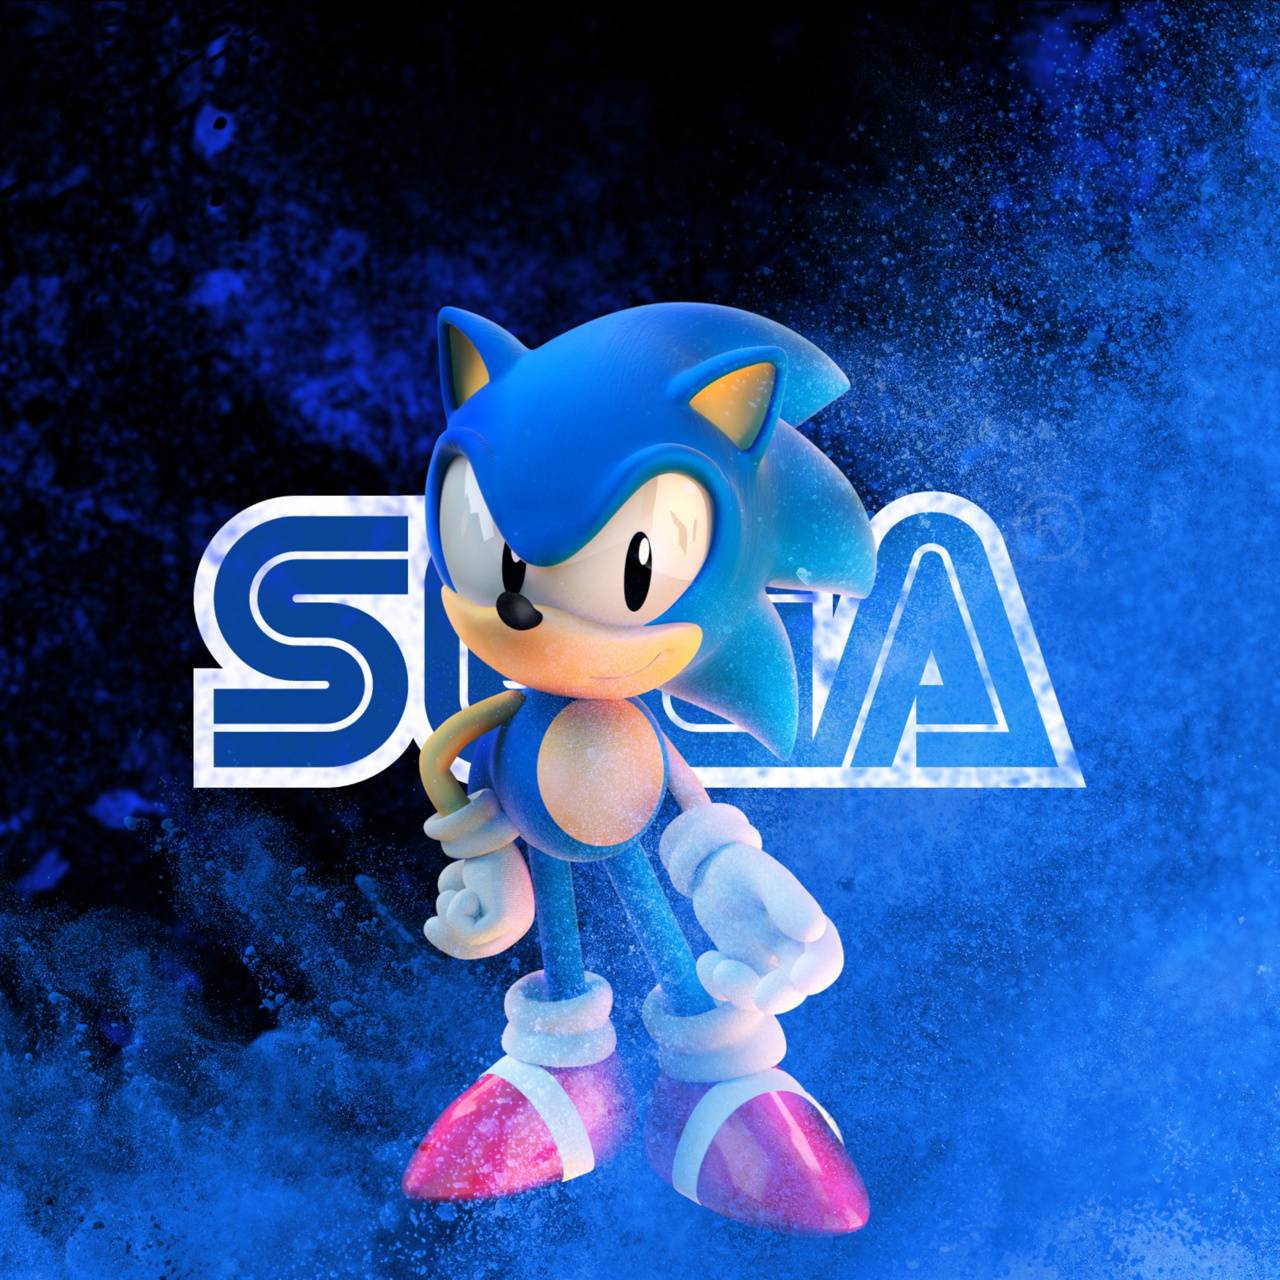 Sega Sonic Wallpaper Free Sega Sonic Background